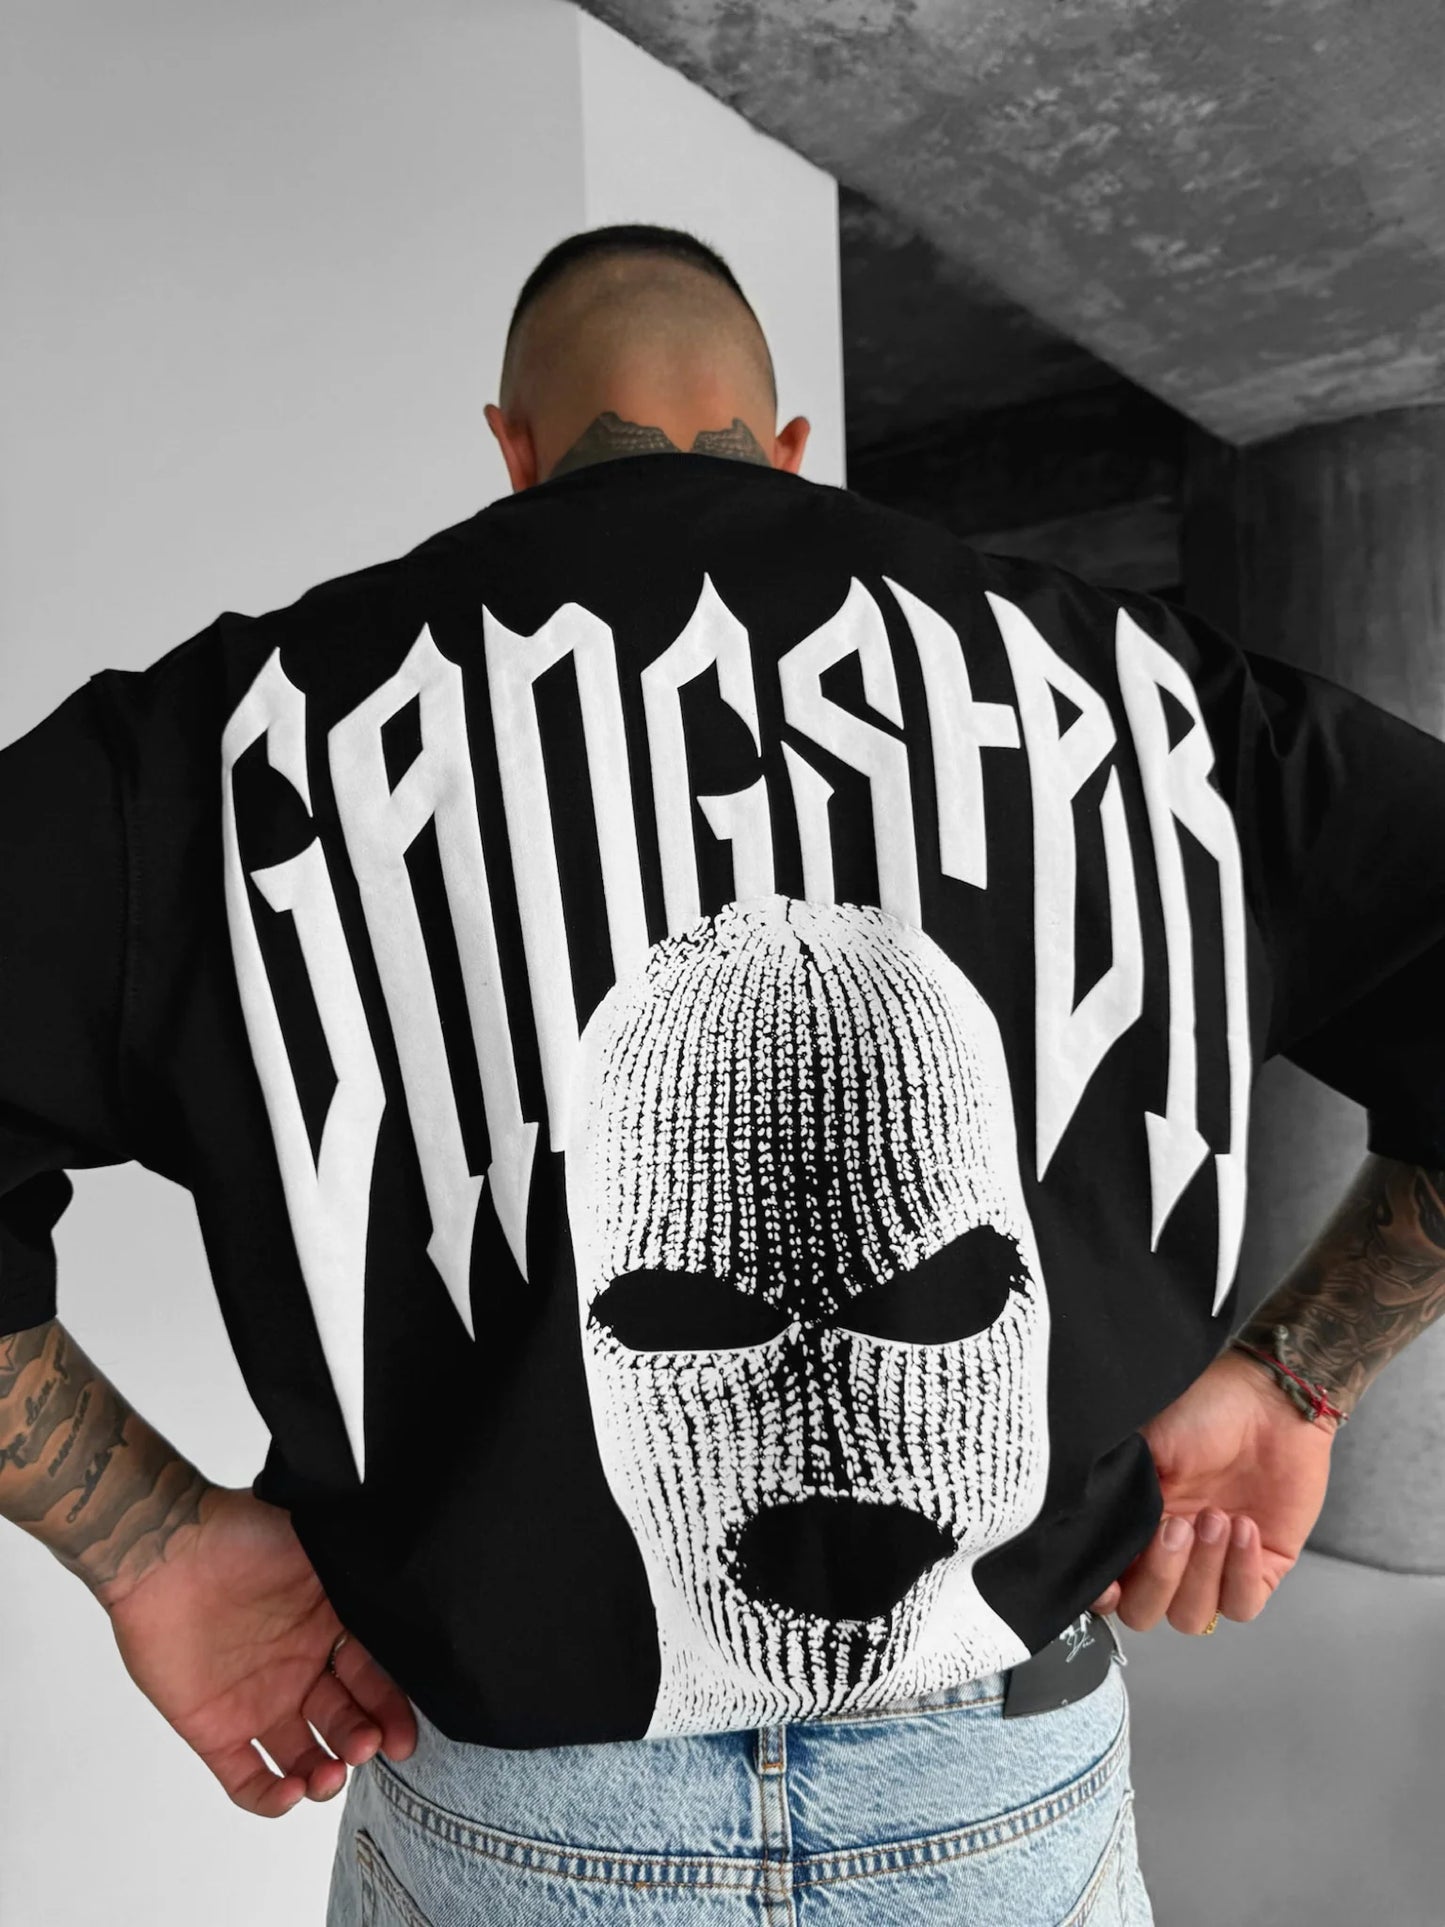 Gangster Oversized T Shirt